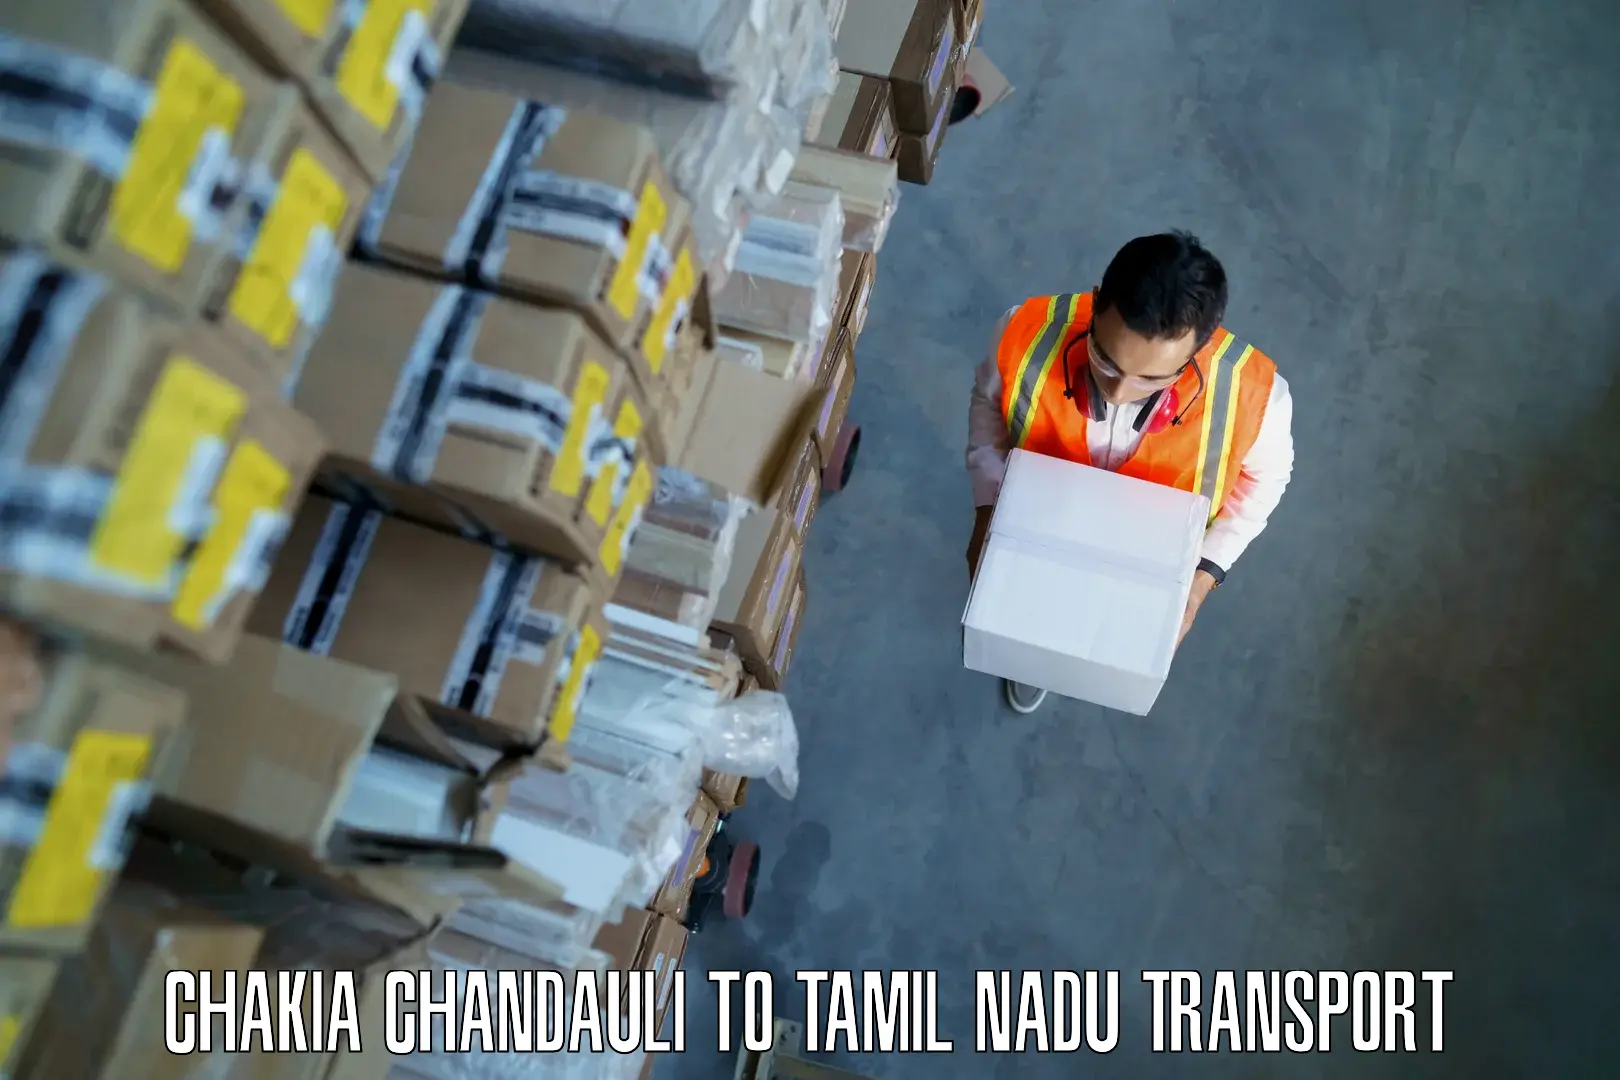 Commercial transport service Chakia Chandauli to Eraiyur